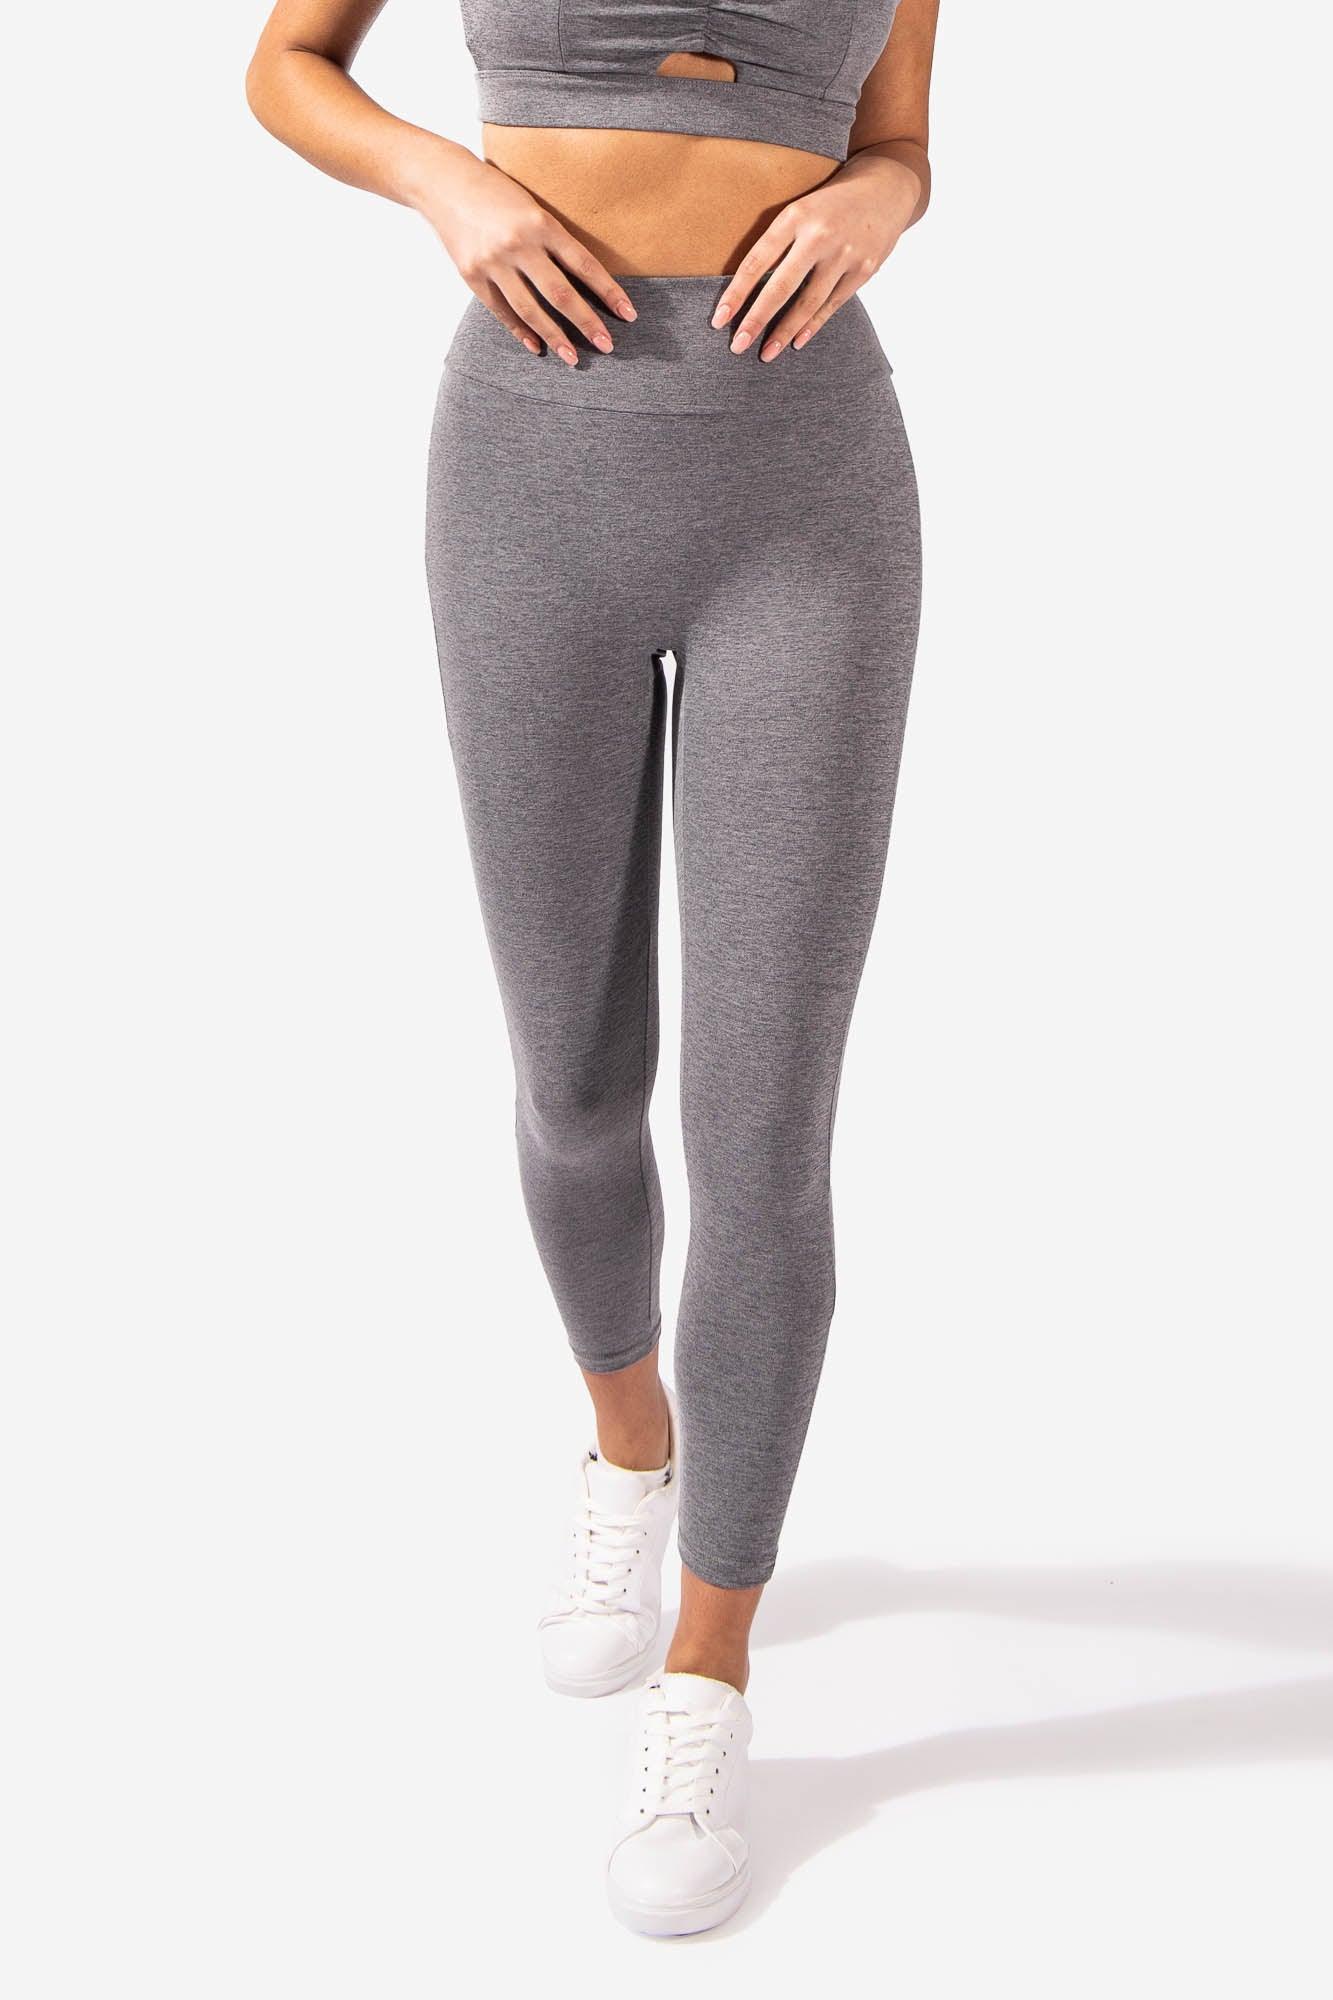 Invictus Lady of Zeta yoga pants, grey  Grey yoga pants, Yoga clothes,  Leggings are not pants